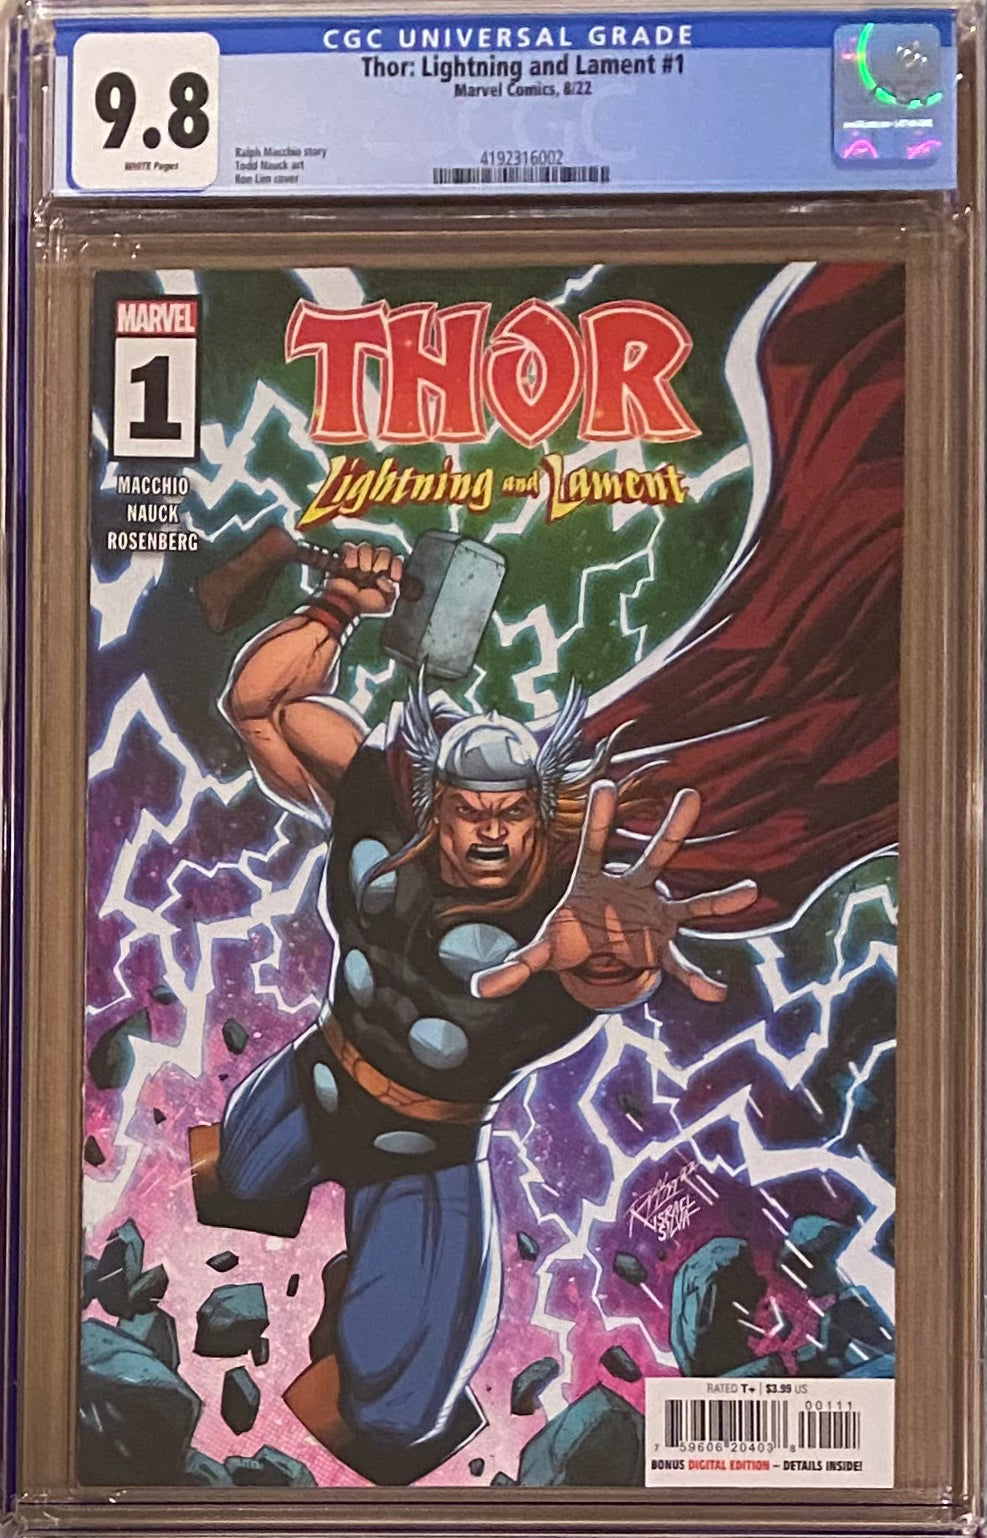 Thor: Lightning and Lament #1 CGC 9.8